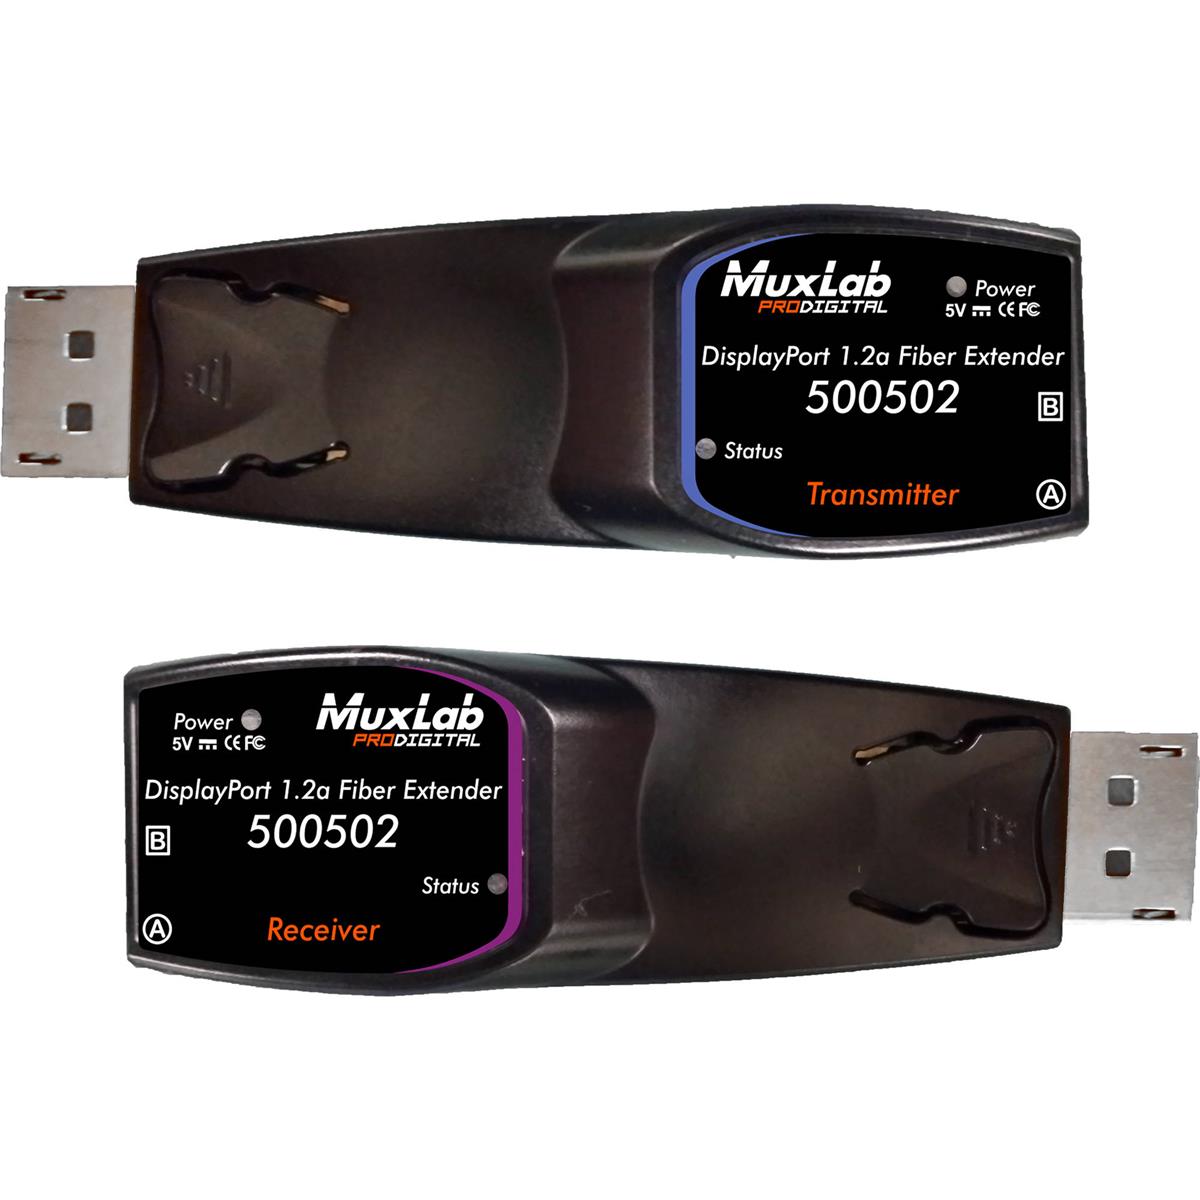 Muxlab MuxLab DisplayPort 1.2A Fiber Extender Kit -  500502